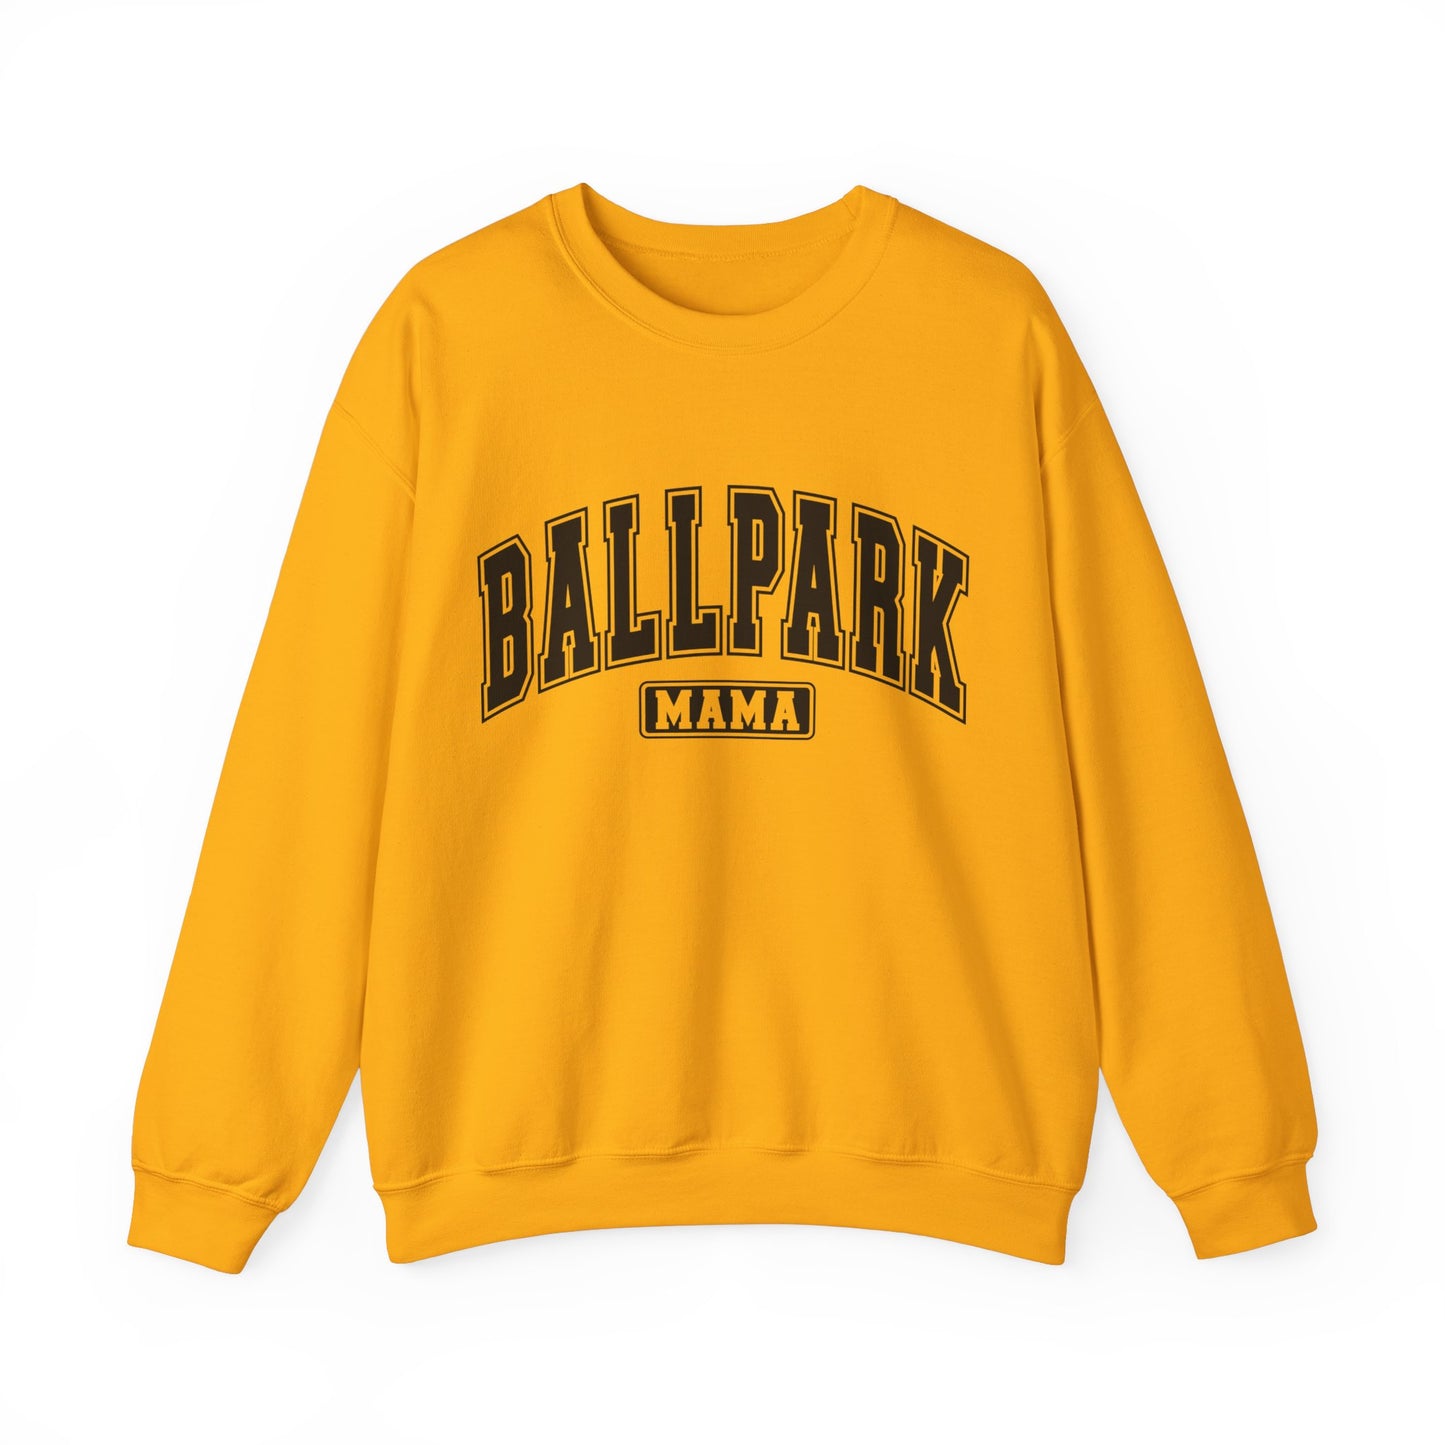 Ball Park Mama Women's Crewneck Sweatshirt Baseball Softball Tball